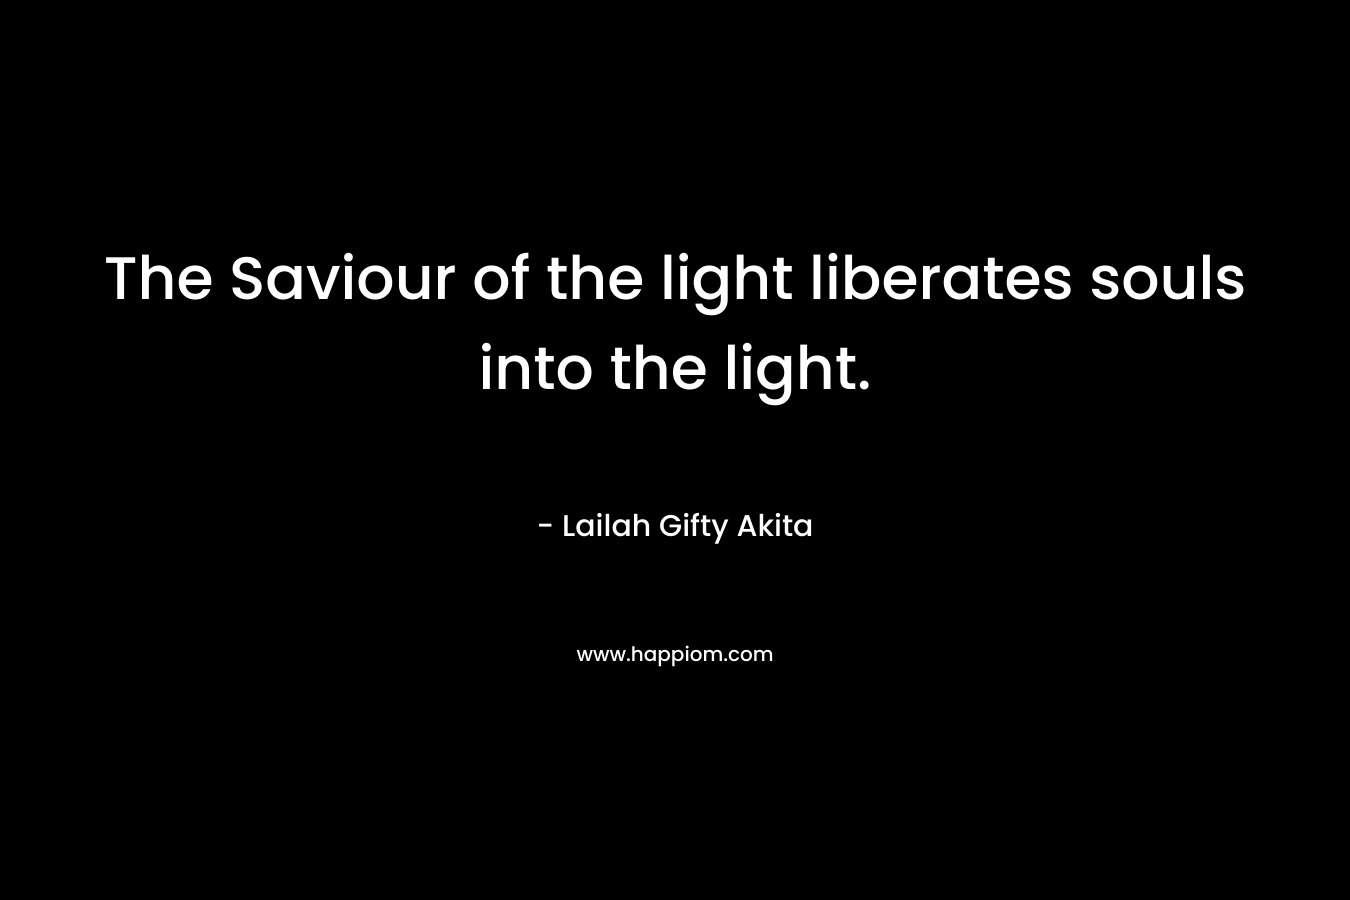 The Saviour of the light liberates souls into the light.